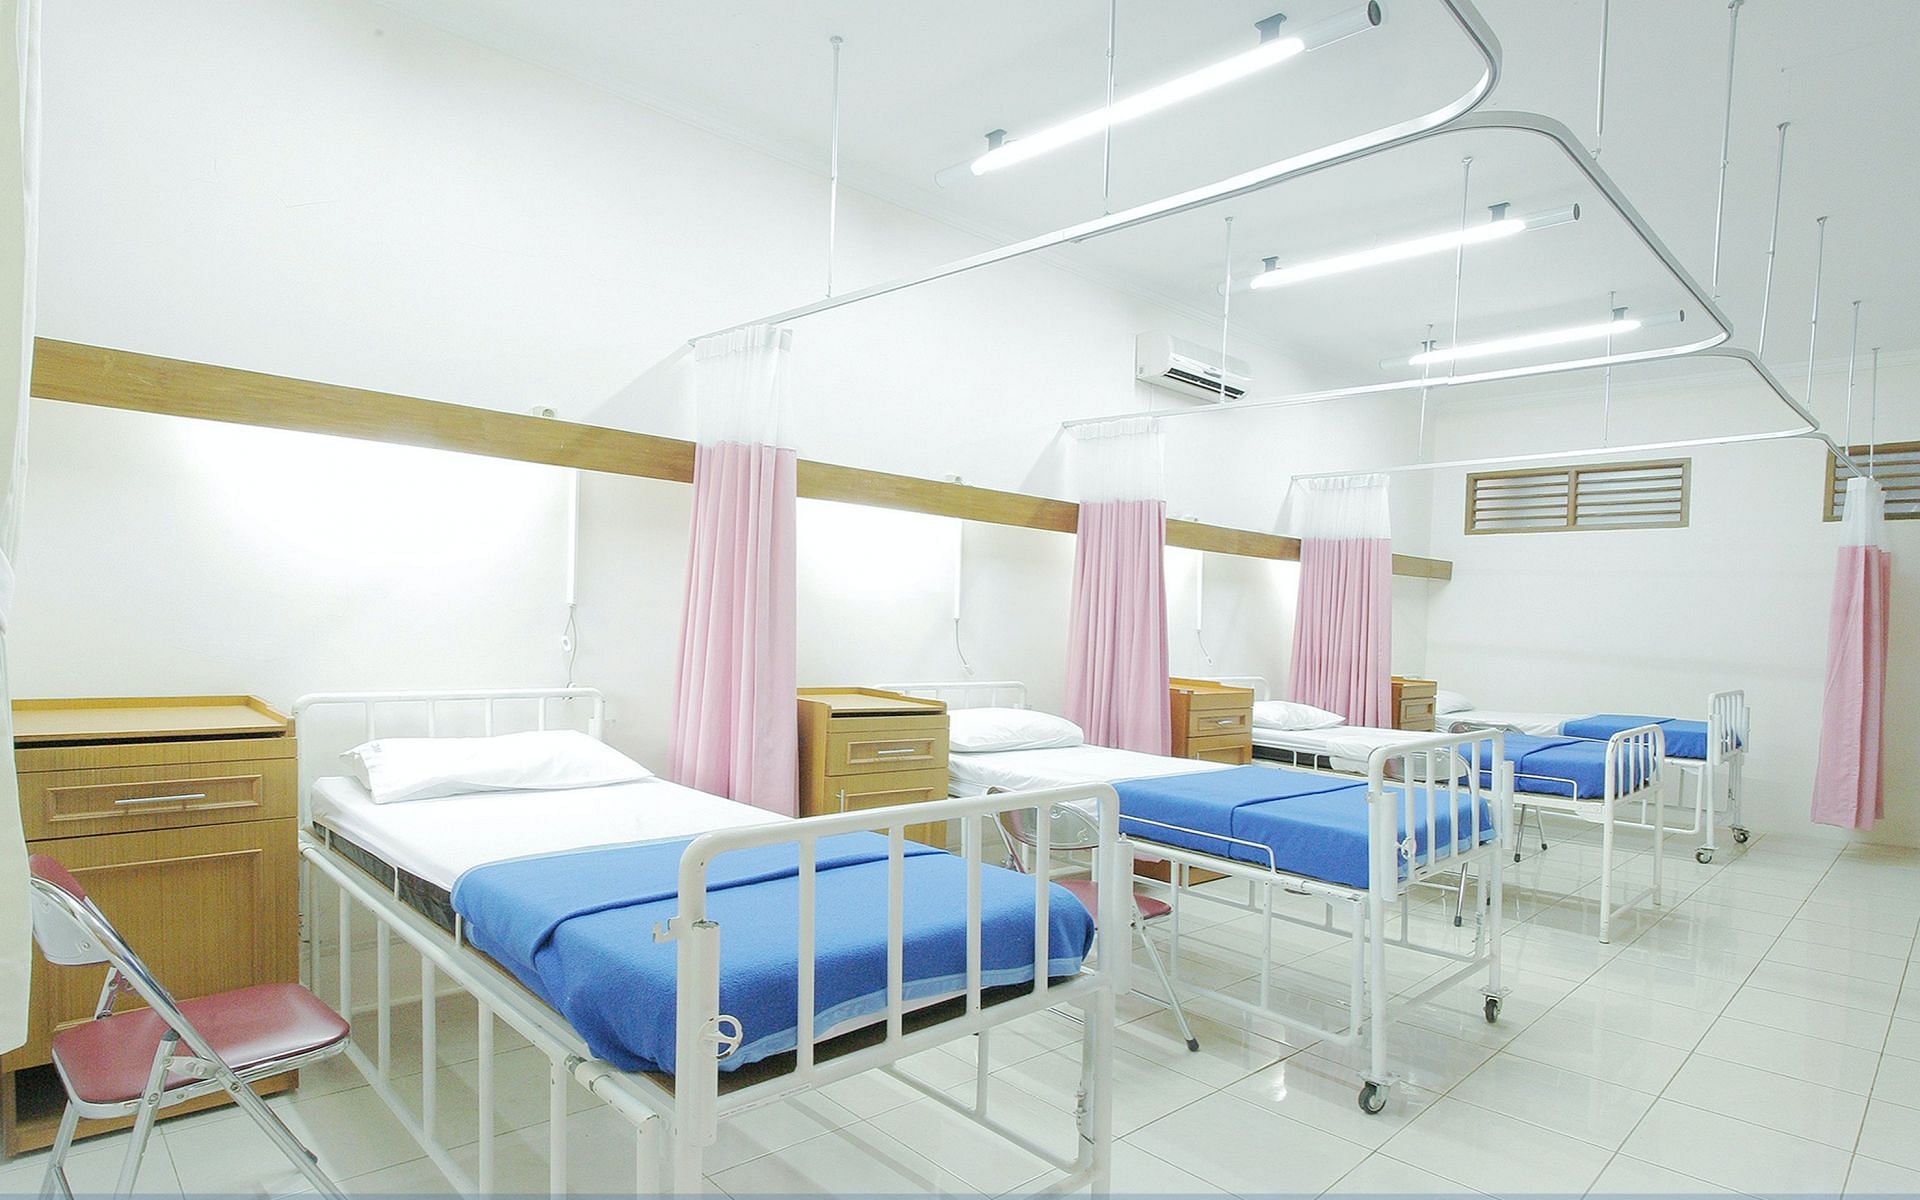 Contaminated hospital equipment can transmit infections. (Image via Unsplash/Adhy Savala)